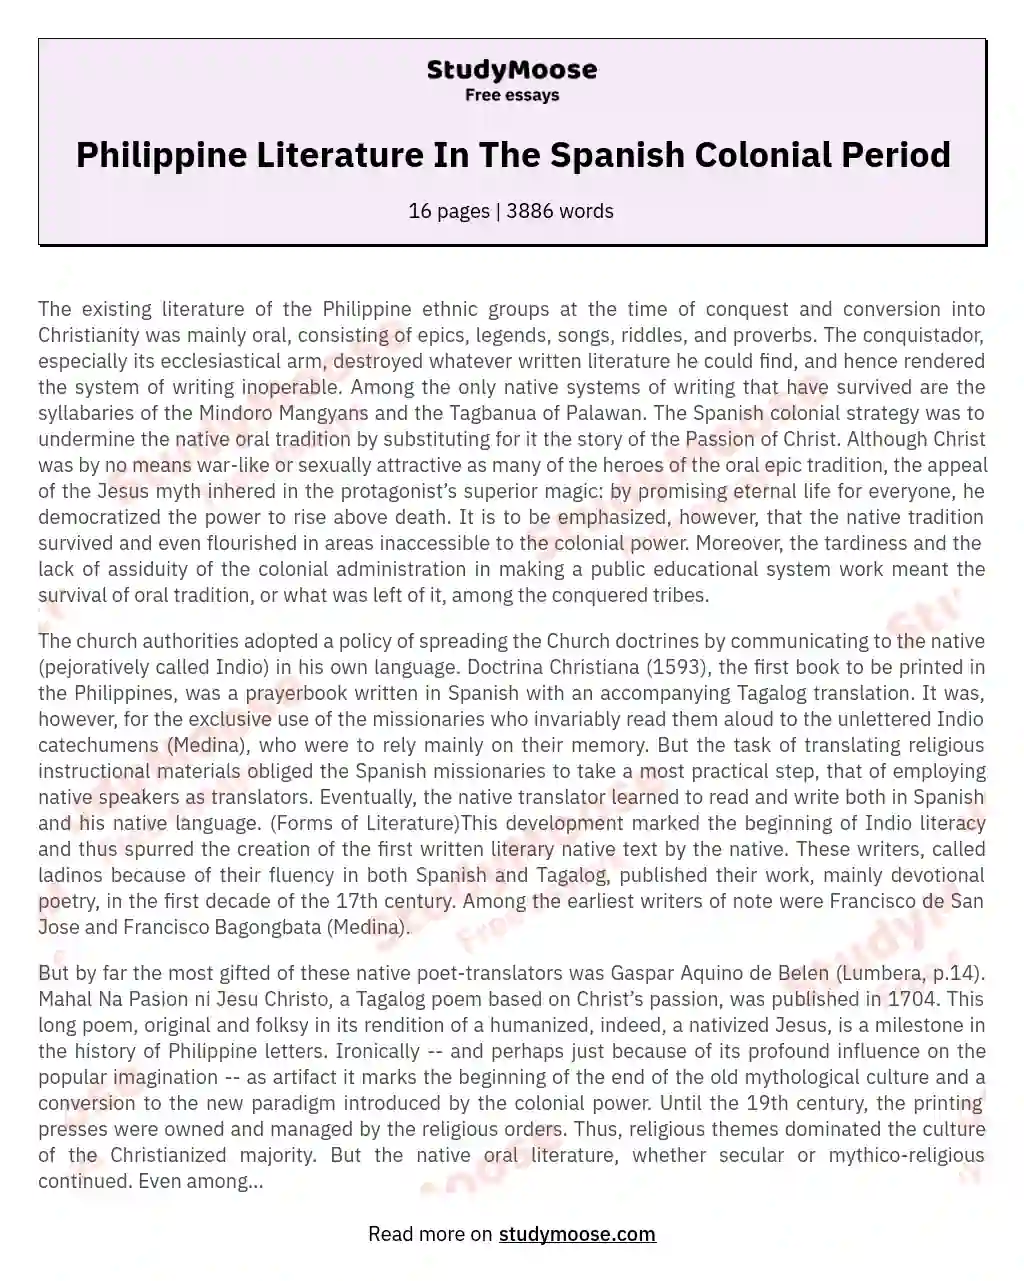 Philippine Literature In The Spanish Colonial Period essay